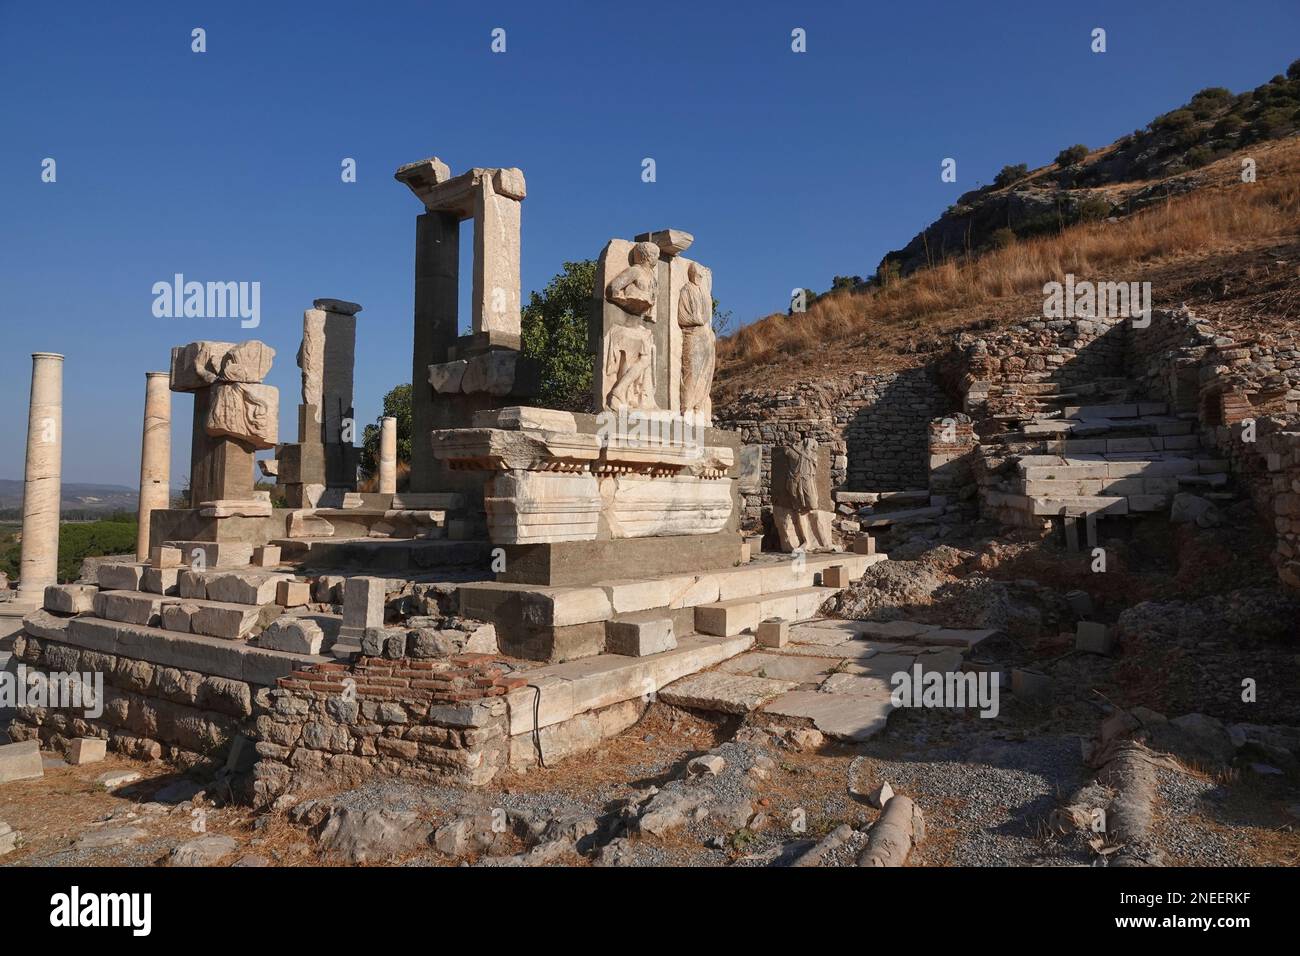 The Memmius Monument, in the ancient city of Ephesus, Turkey Stock Photo